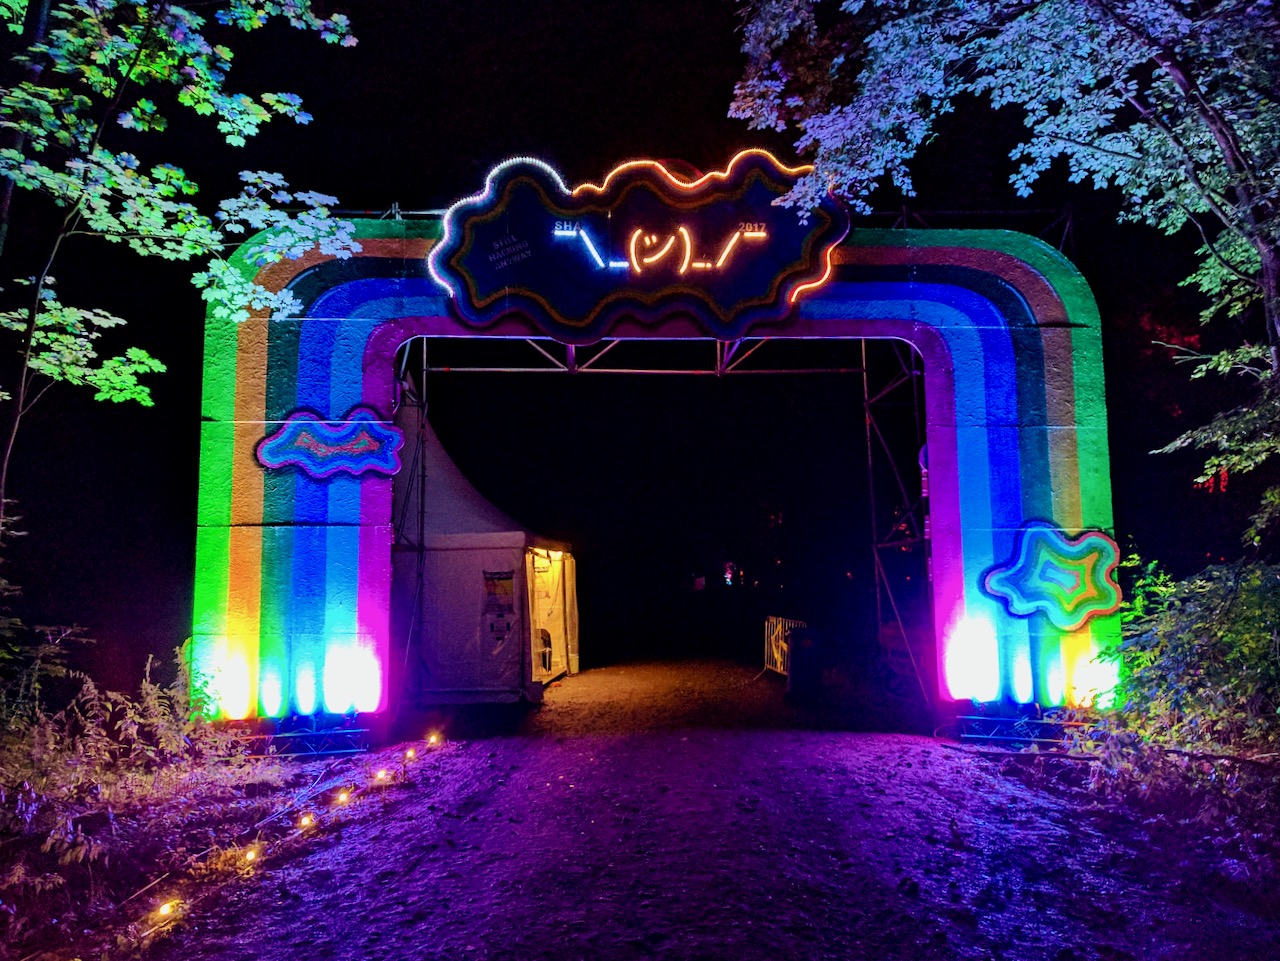 Entrance gate of SHA2017, the event preceding MCH2021. (Taken by Polyfloyd)